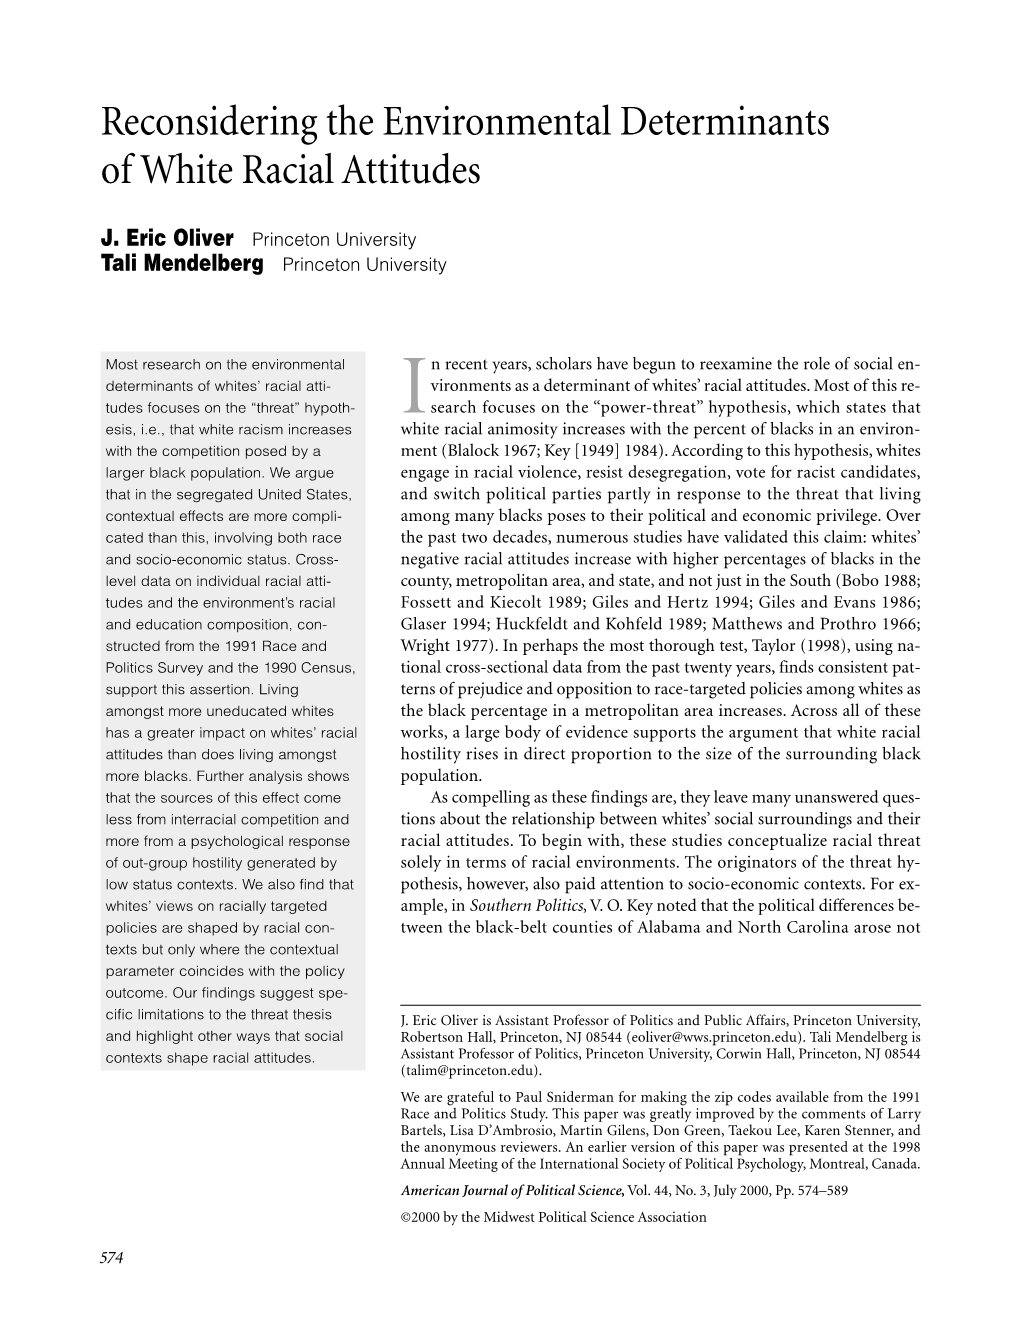 Reconsidering the Environmental Determinants of White Racial Attitudes